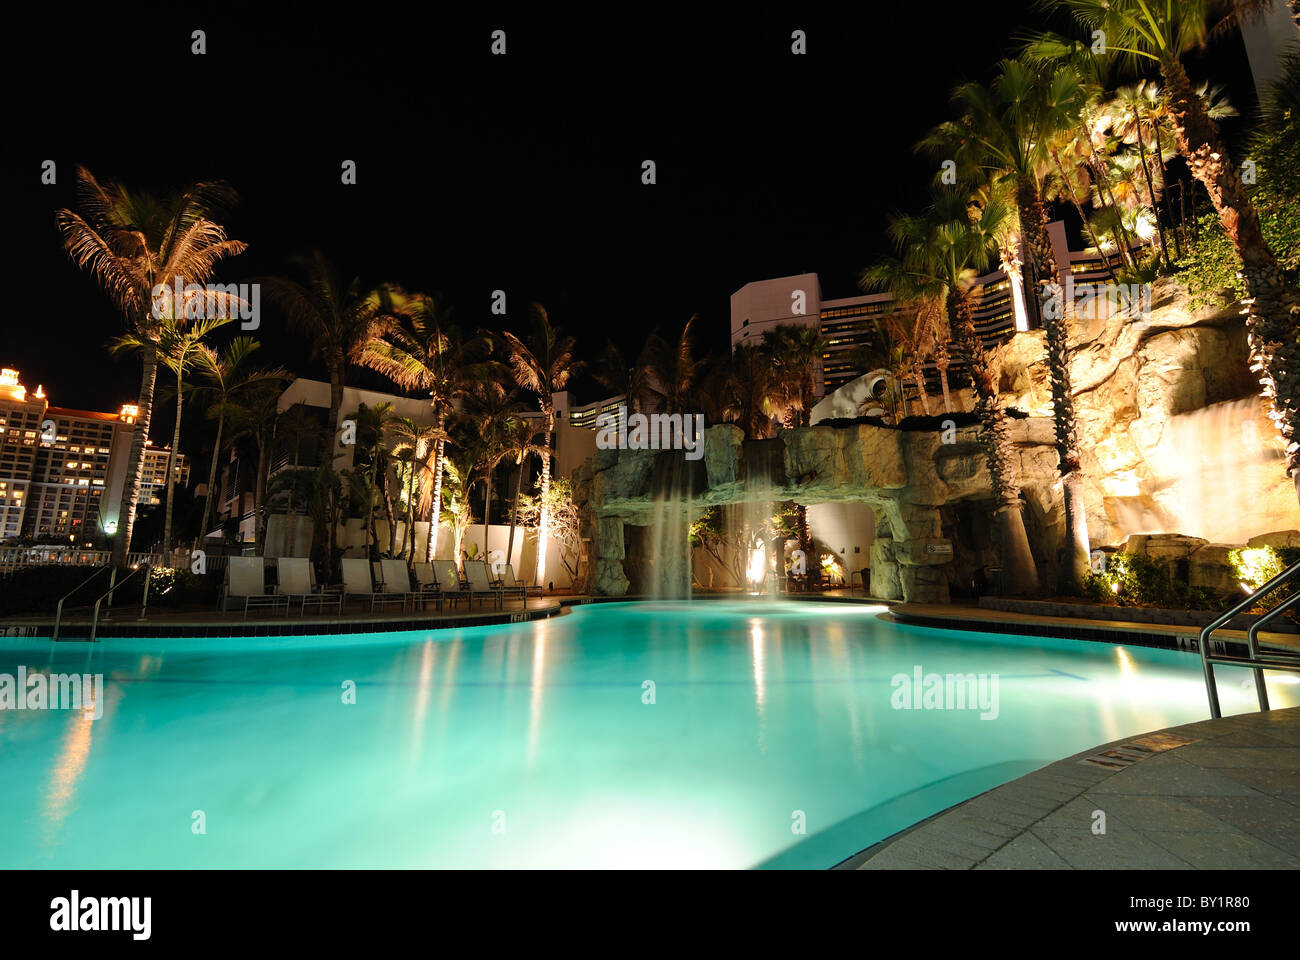 A resort swimming pool at night Stock Photo